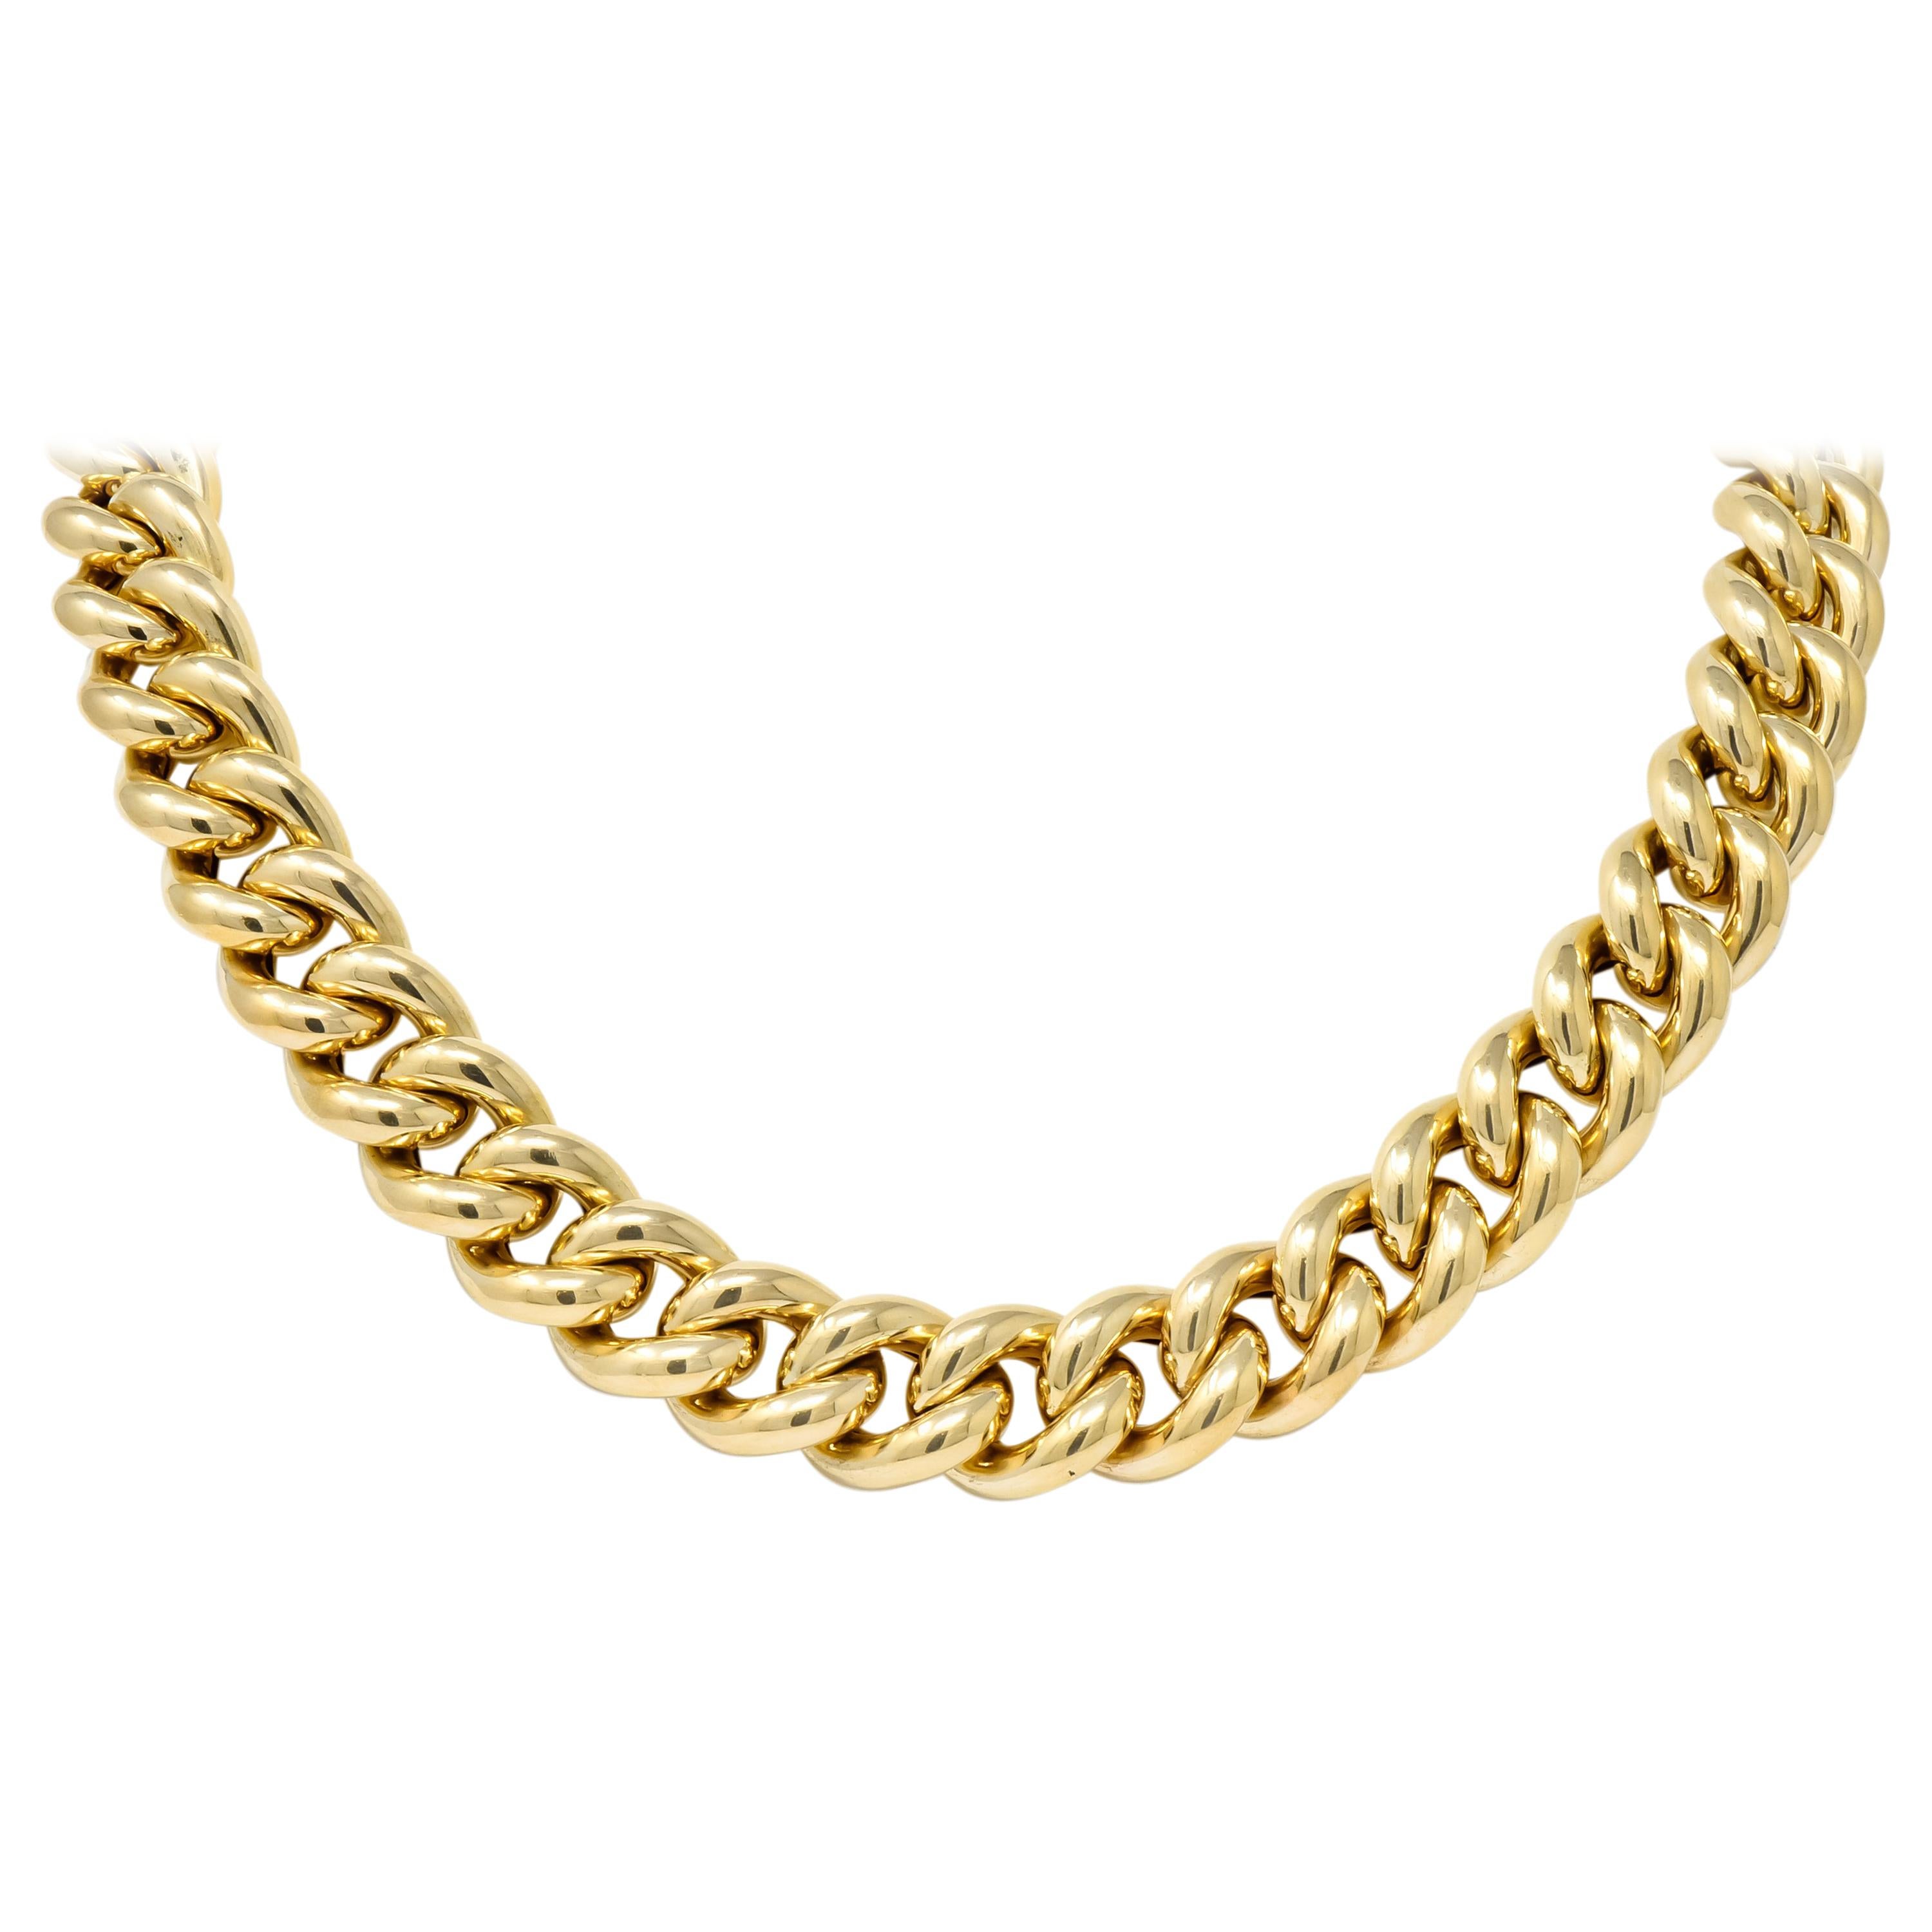 Vintage Italian 14 Karat Gold Puffed Curb Link Necklace